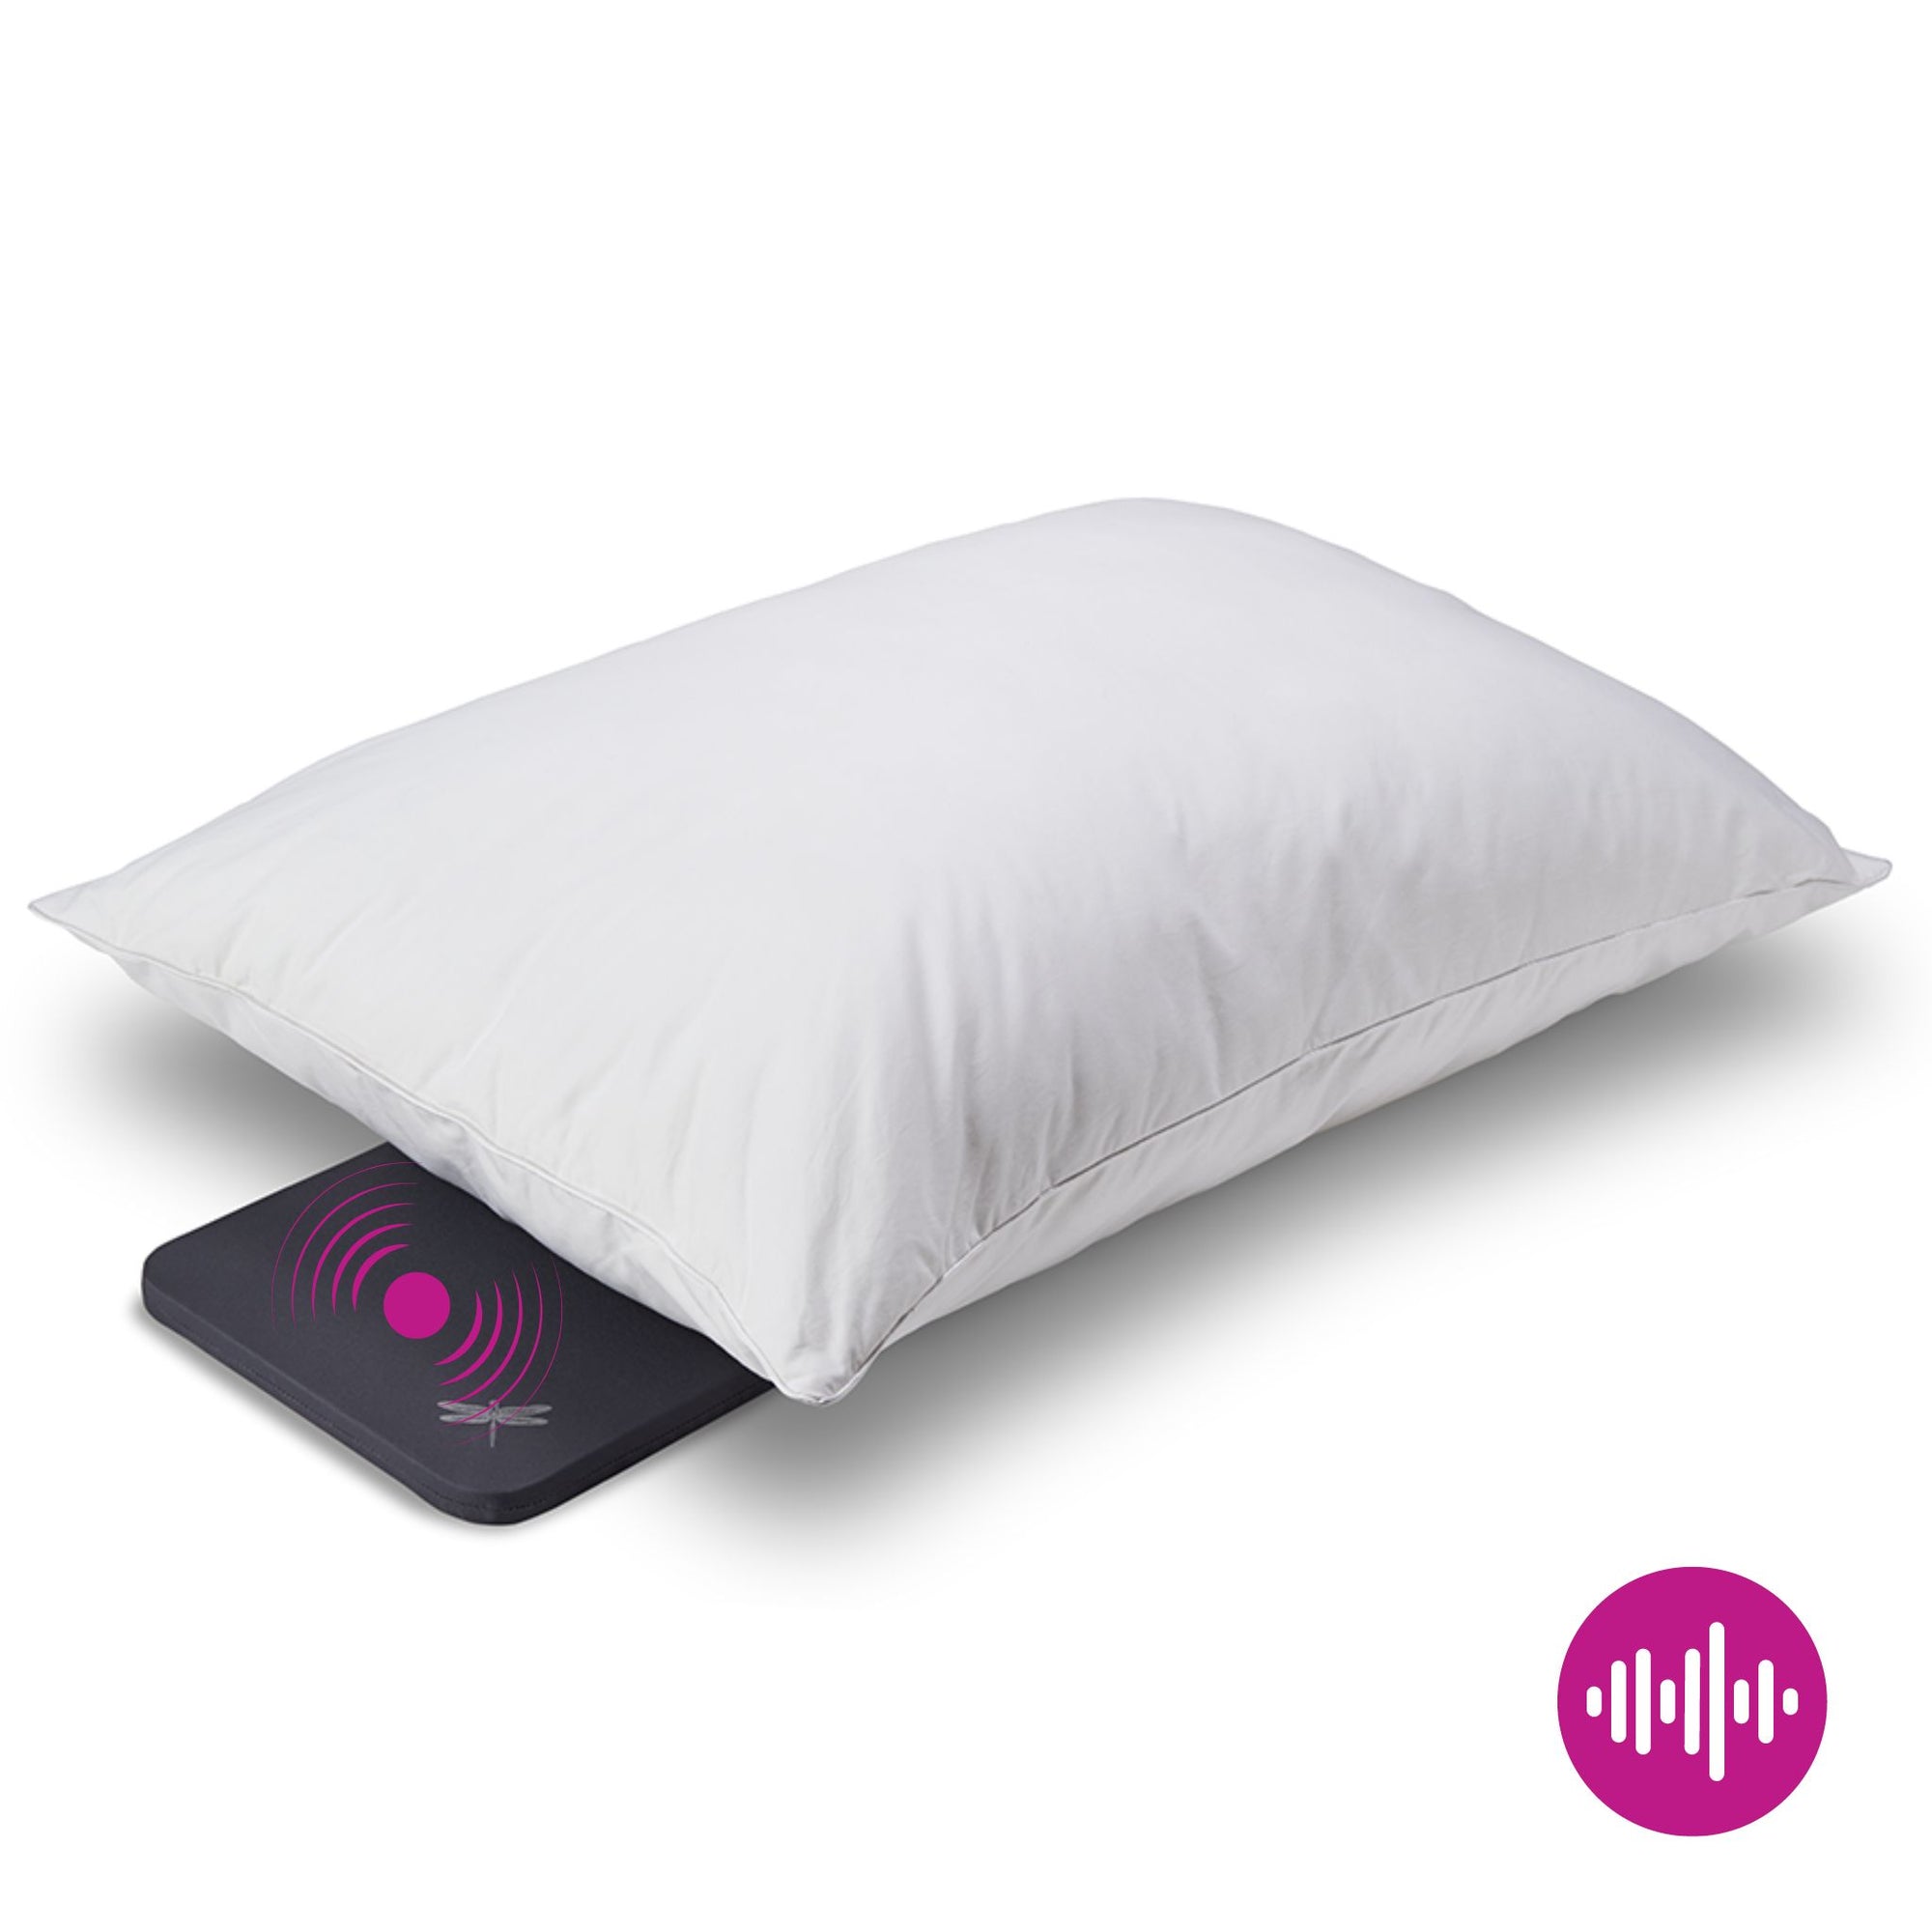 DreamSleep Granny Stripe Pillow 4-Pack - Standard